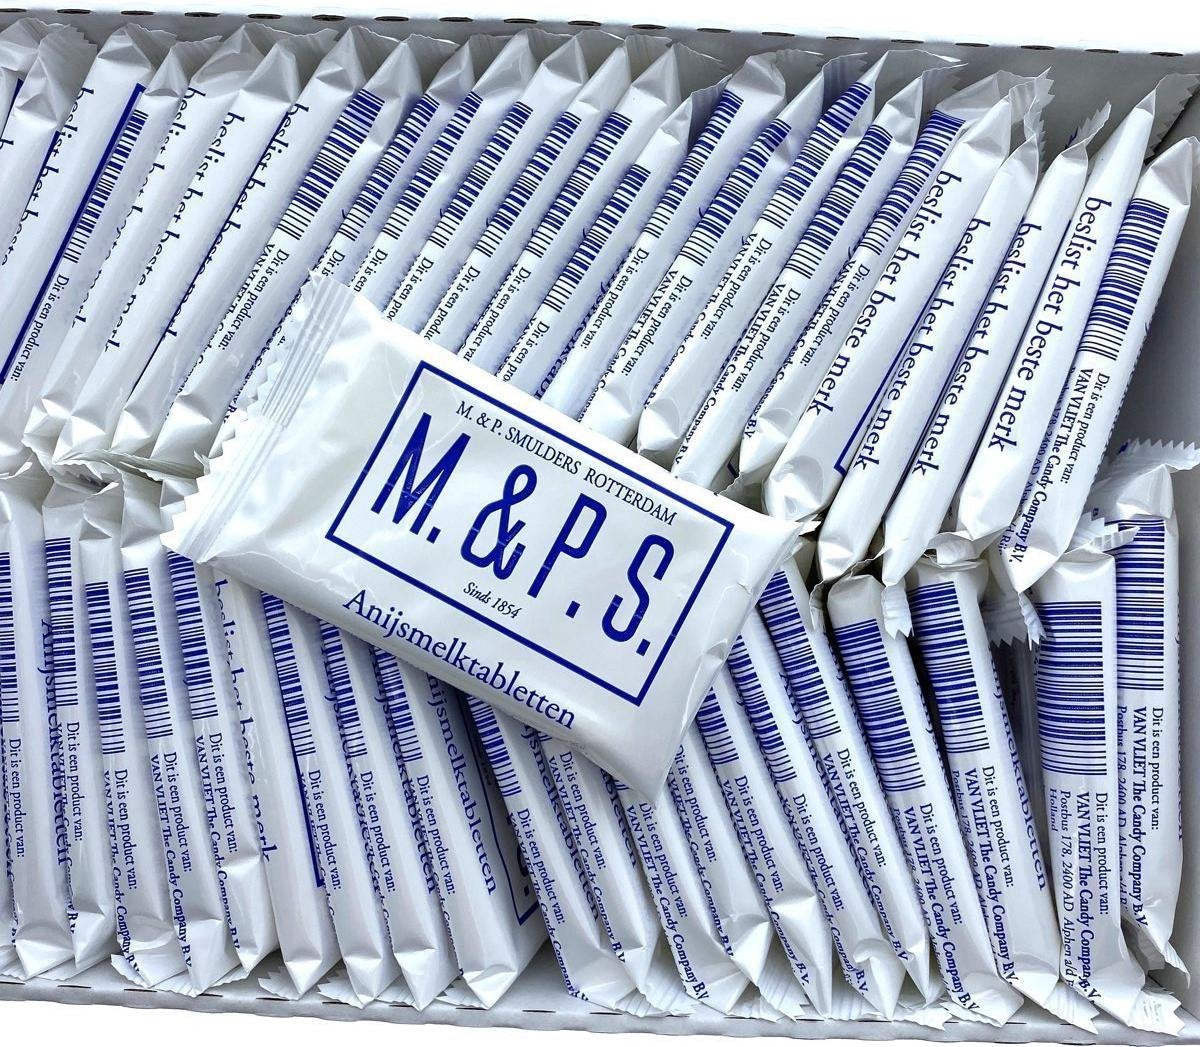 M. & P.S. Aniese tablets - Original Old Dutch Brand - 25 pieces - Viv! Food Luxuries